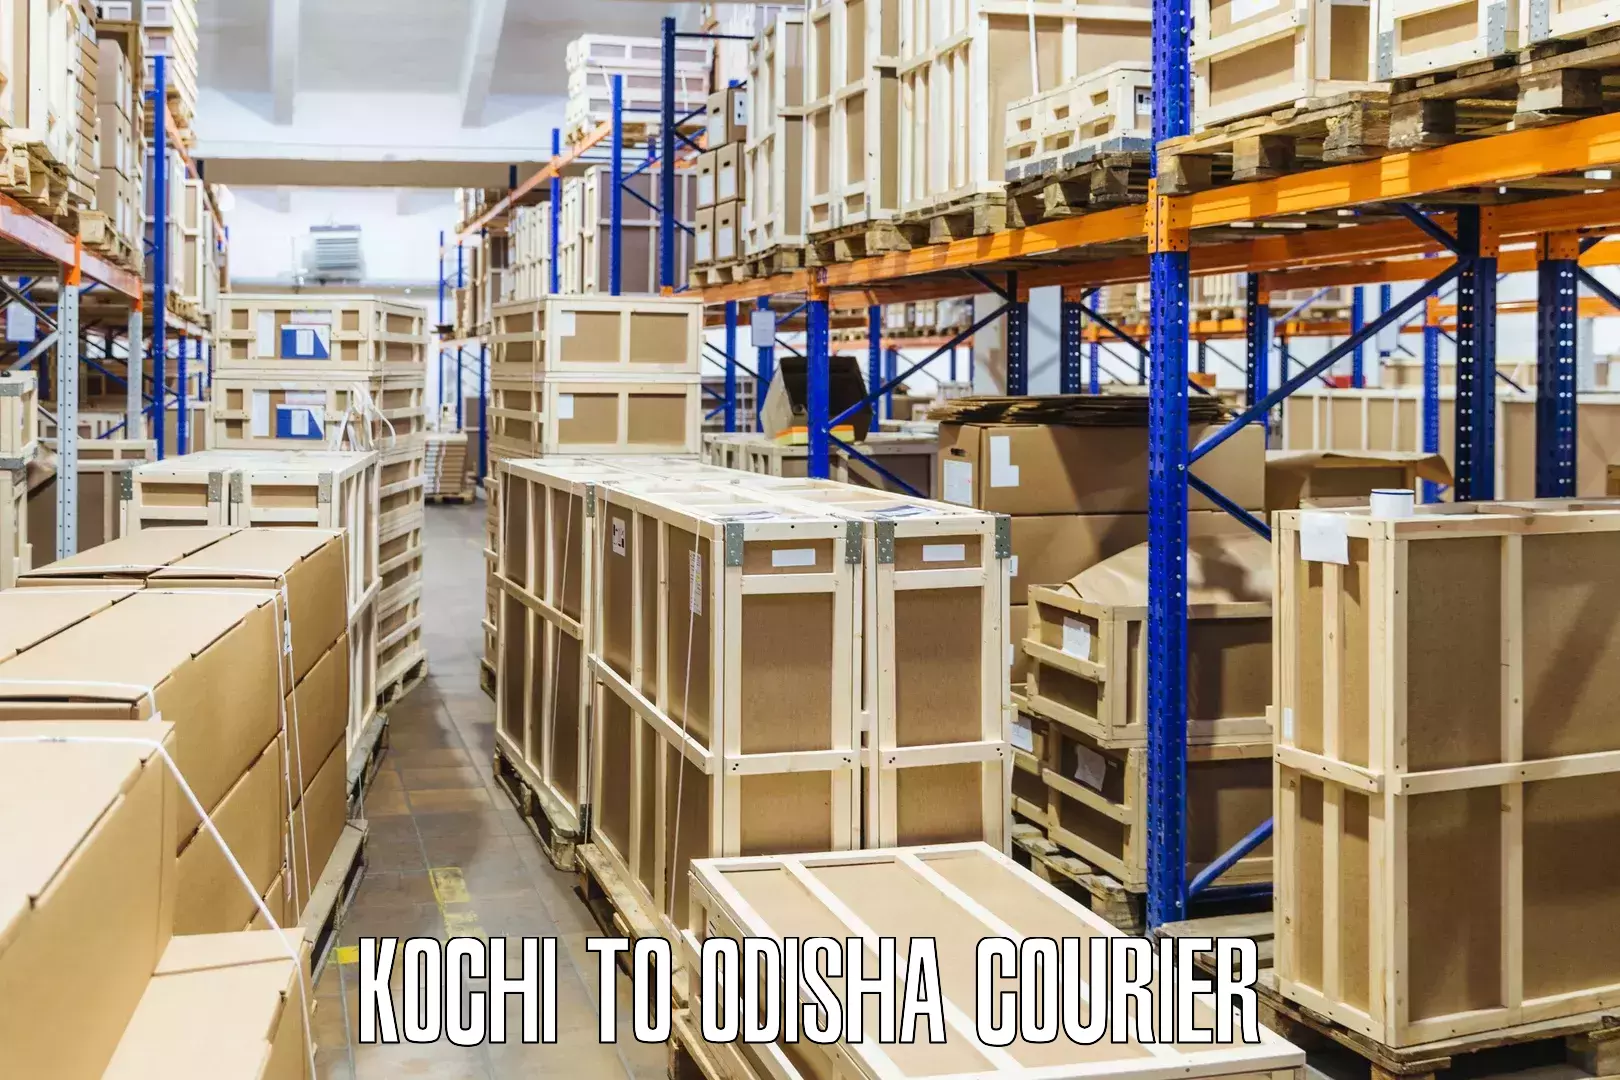 Courier service comparison Kochi to Raighar